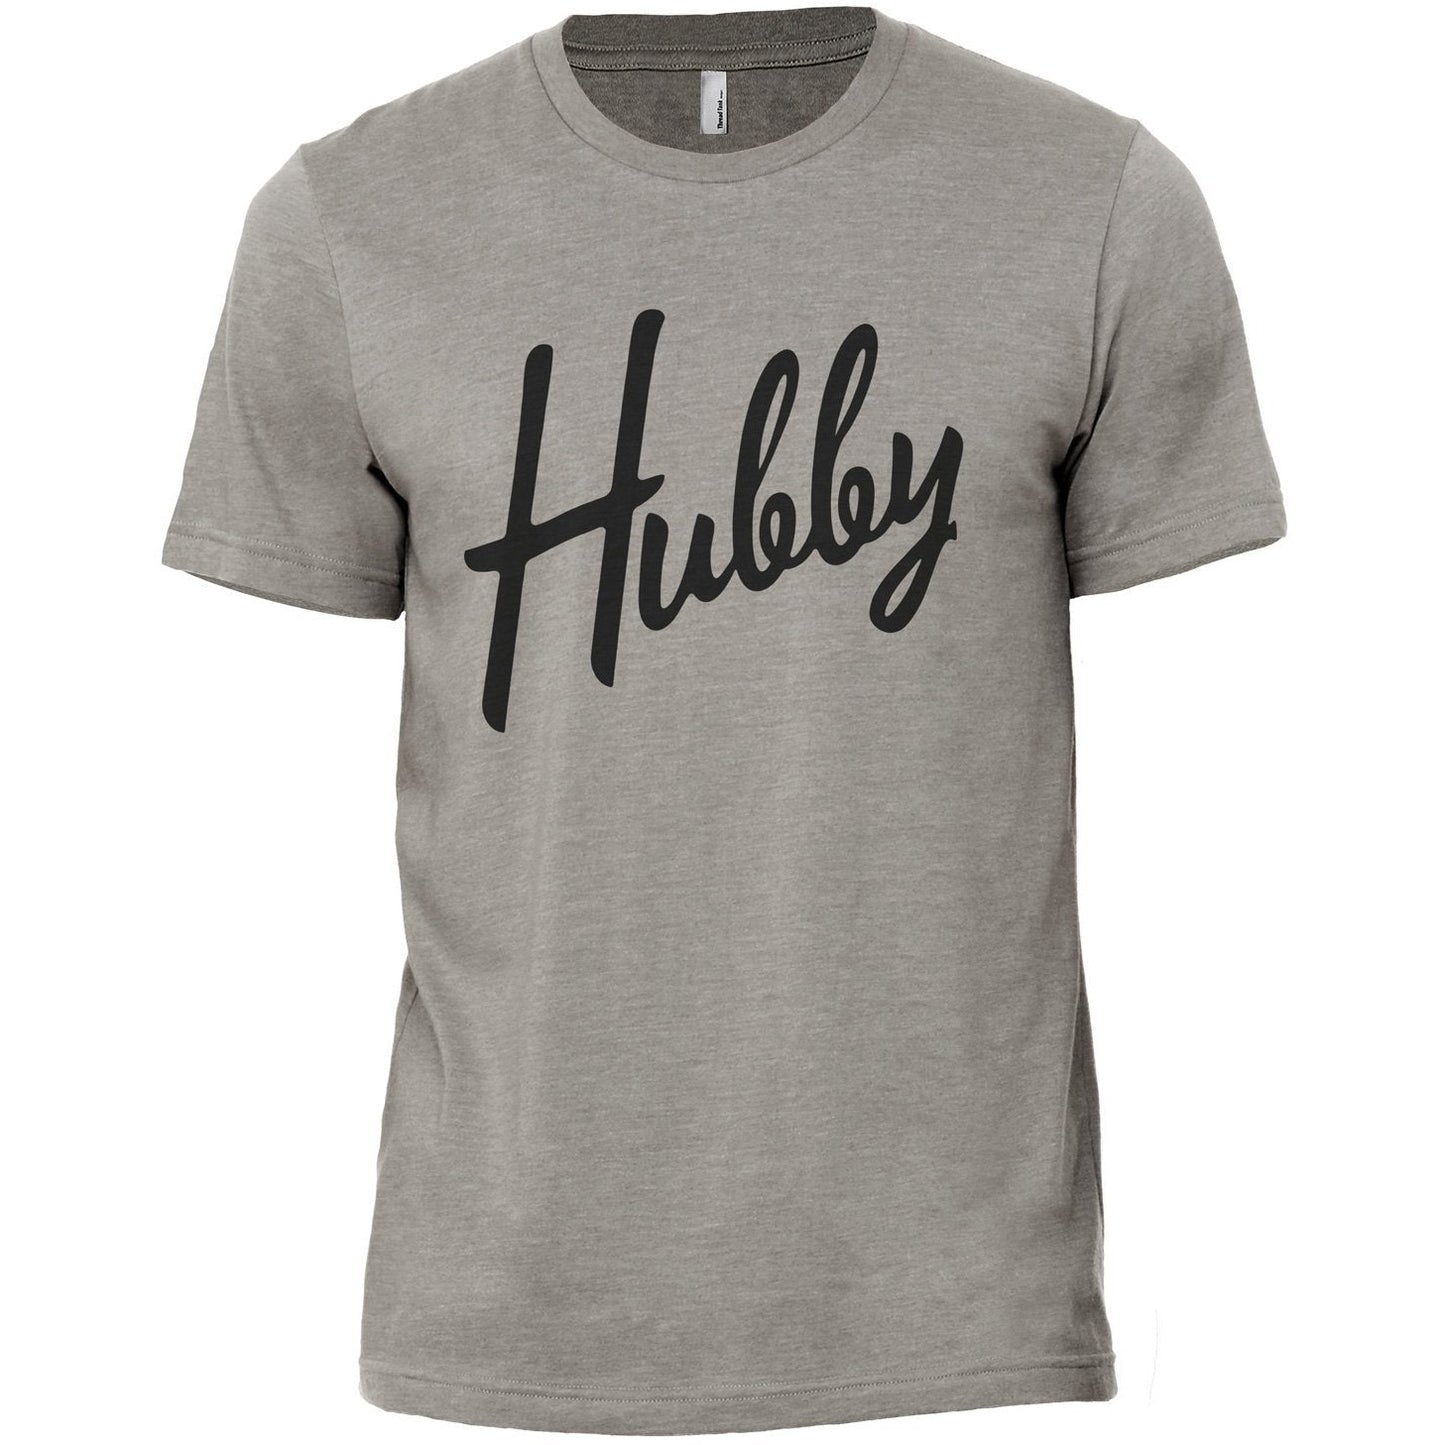 Hubby Cursive Military Grey Printed Graphic Men's Crew T-Shirt Tee